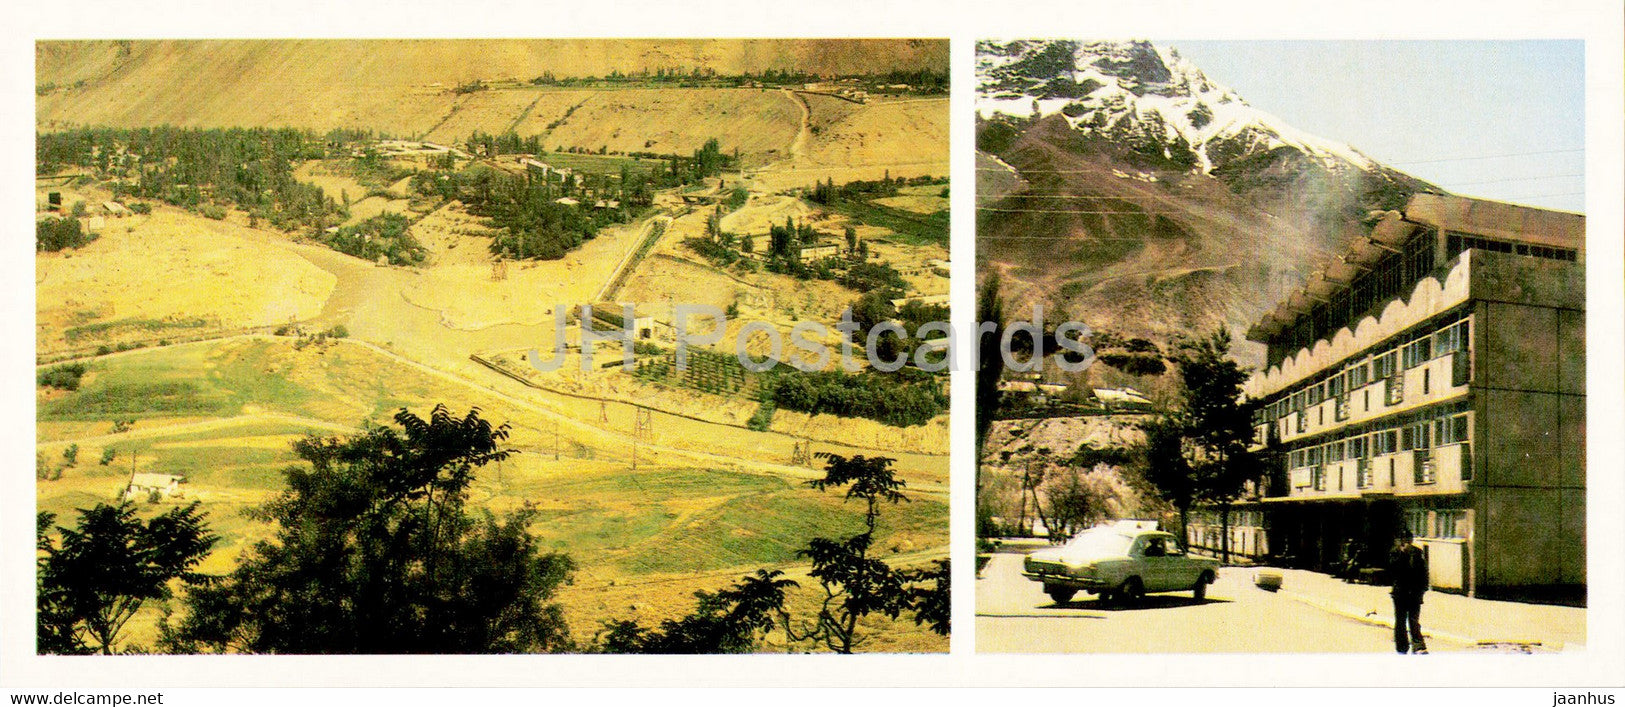 Pamir - Gorno-Badakhshan - Khorog - Lenin hydroelectric power plant - hotel Druzhba - 1985 - Tajikistan USSR - unused - JH Postcards